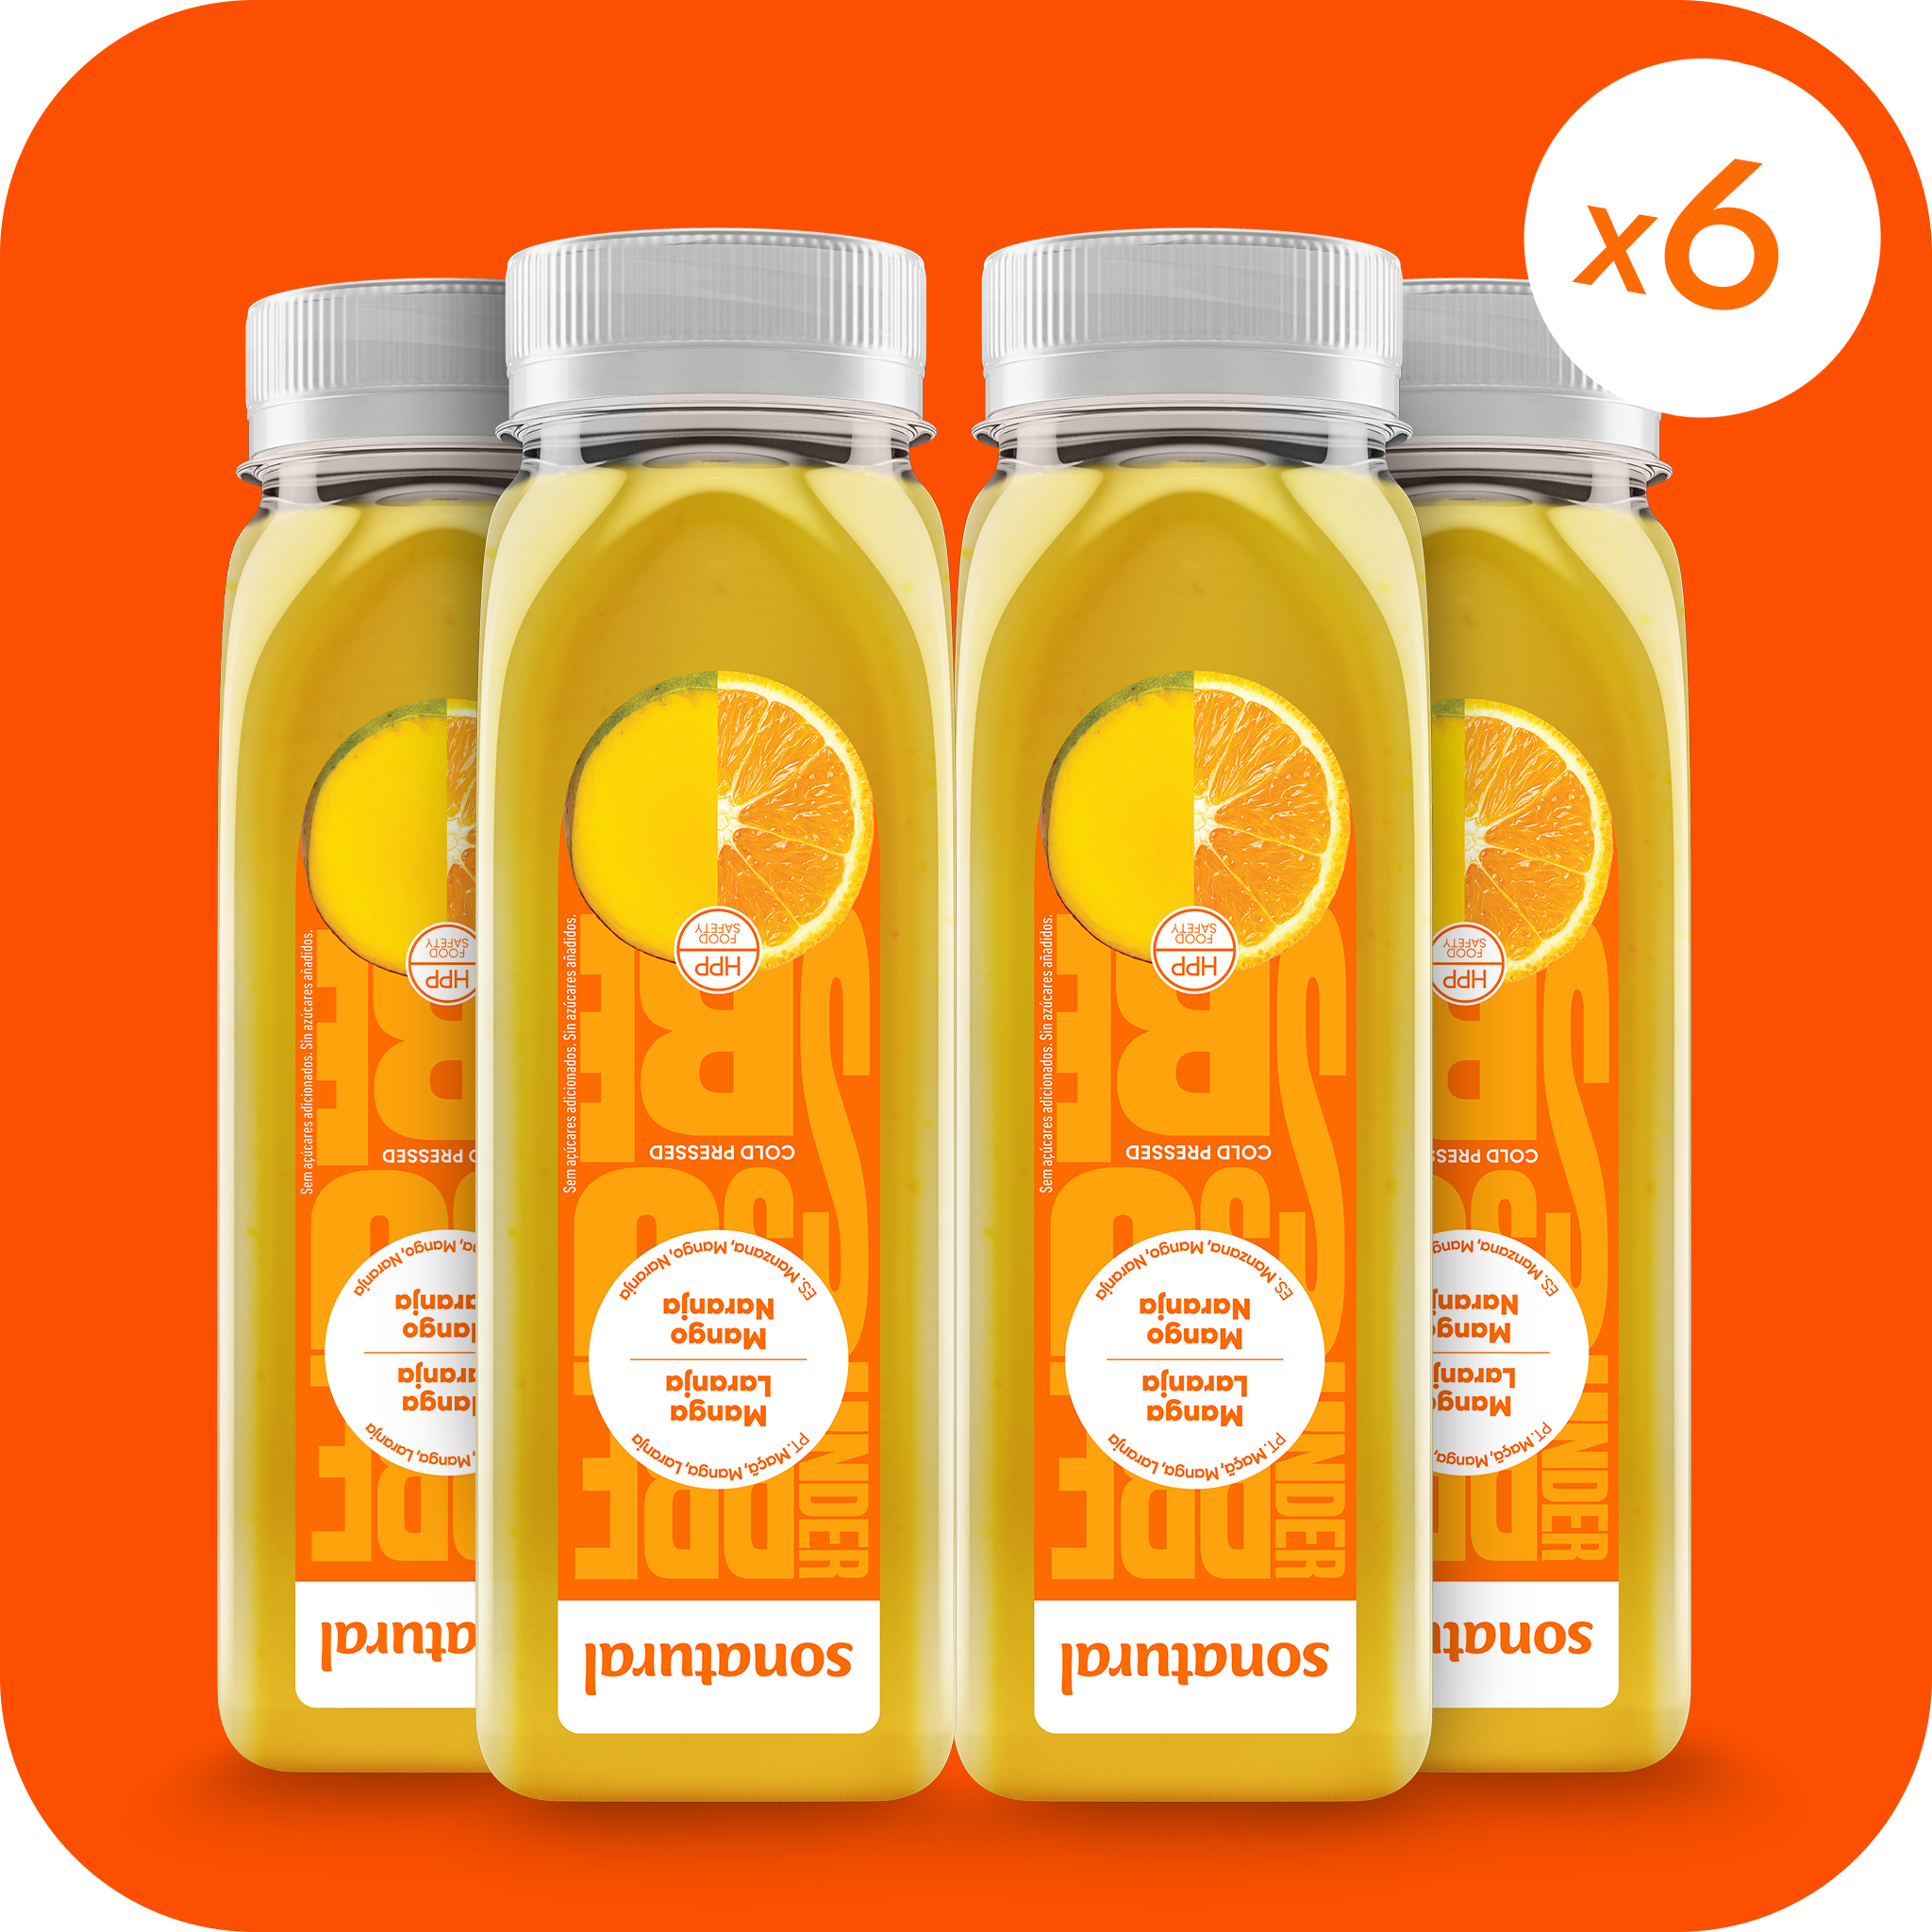 Sonatural Orange Mango Juice 250ml x3